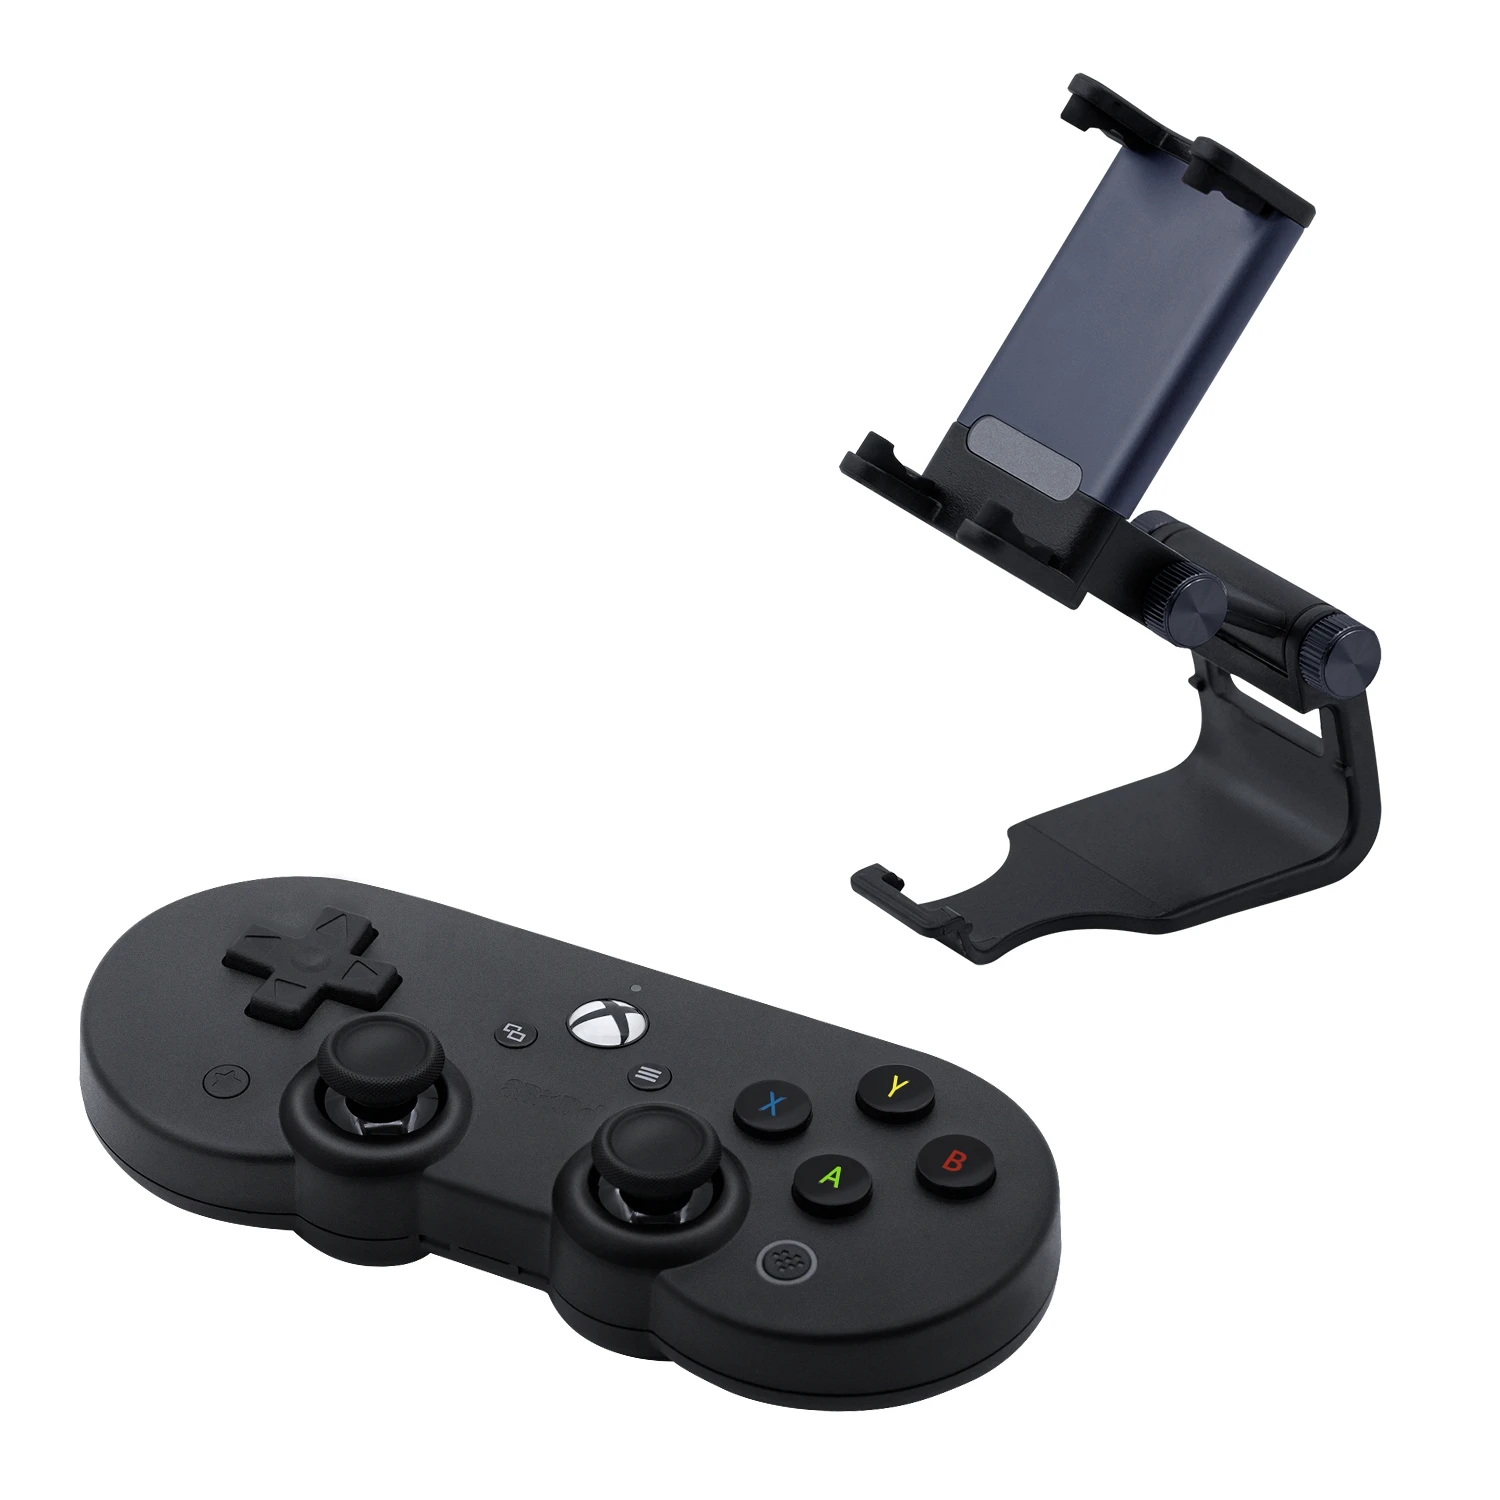 Accessori 8bitdo SN30 Pro Game Controller GamePad Controle Xbox Cloud Games On telefono o tablet Android con clip mobile